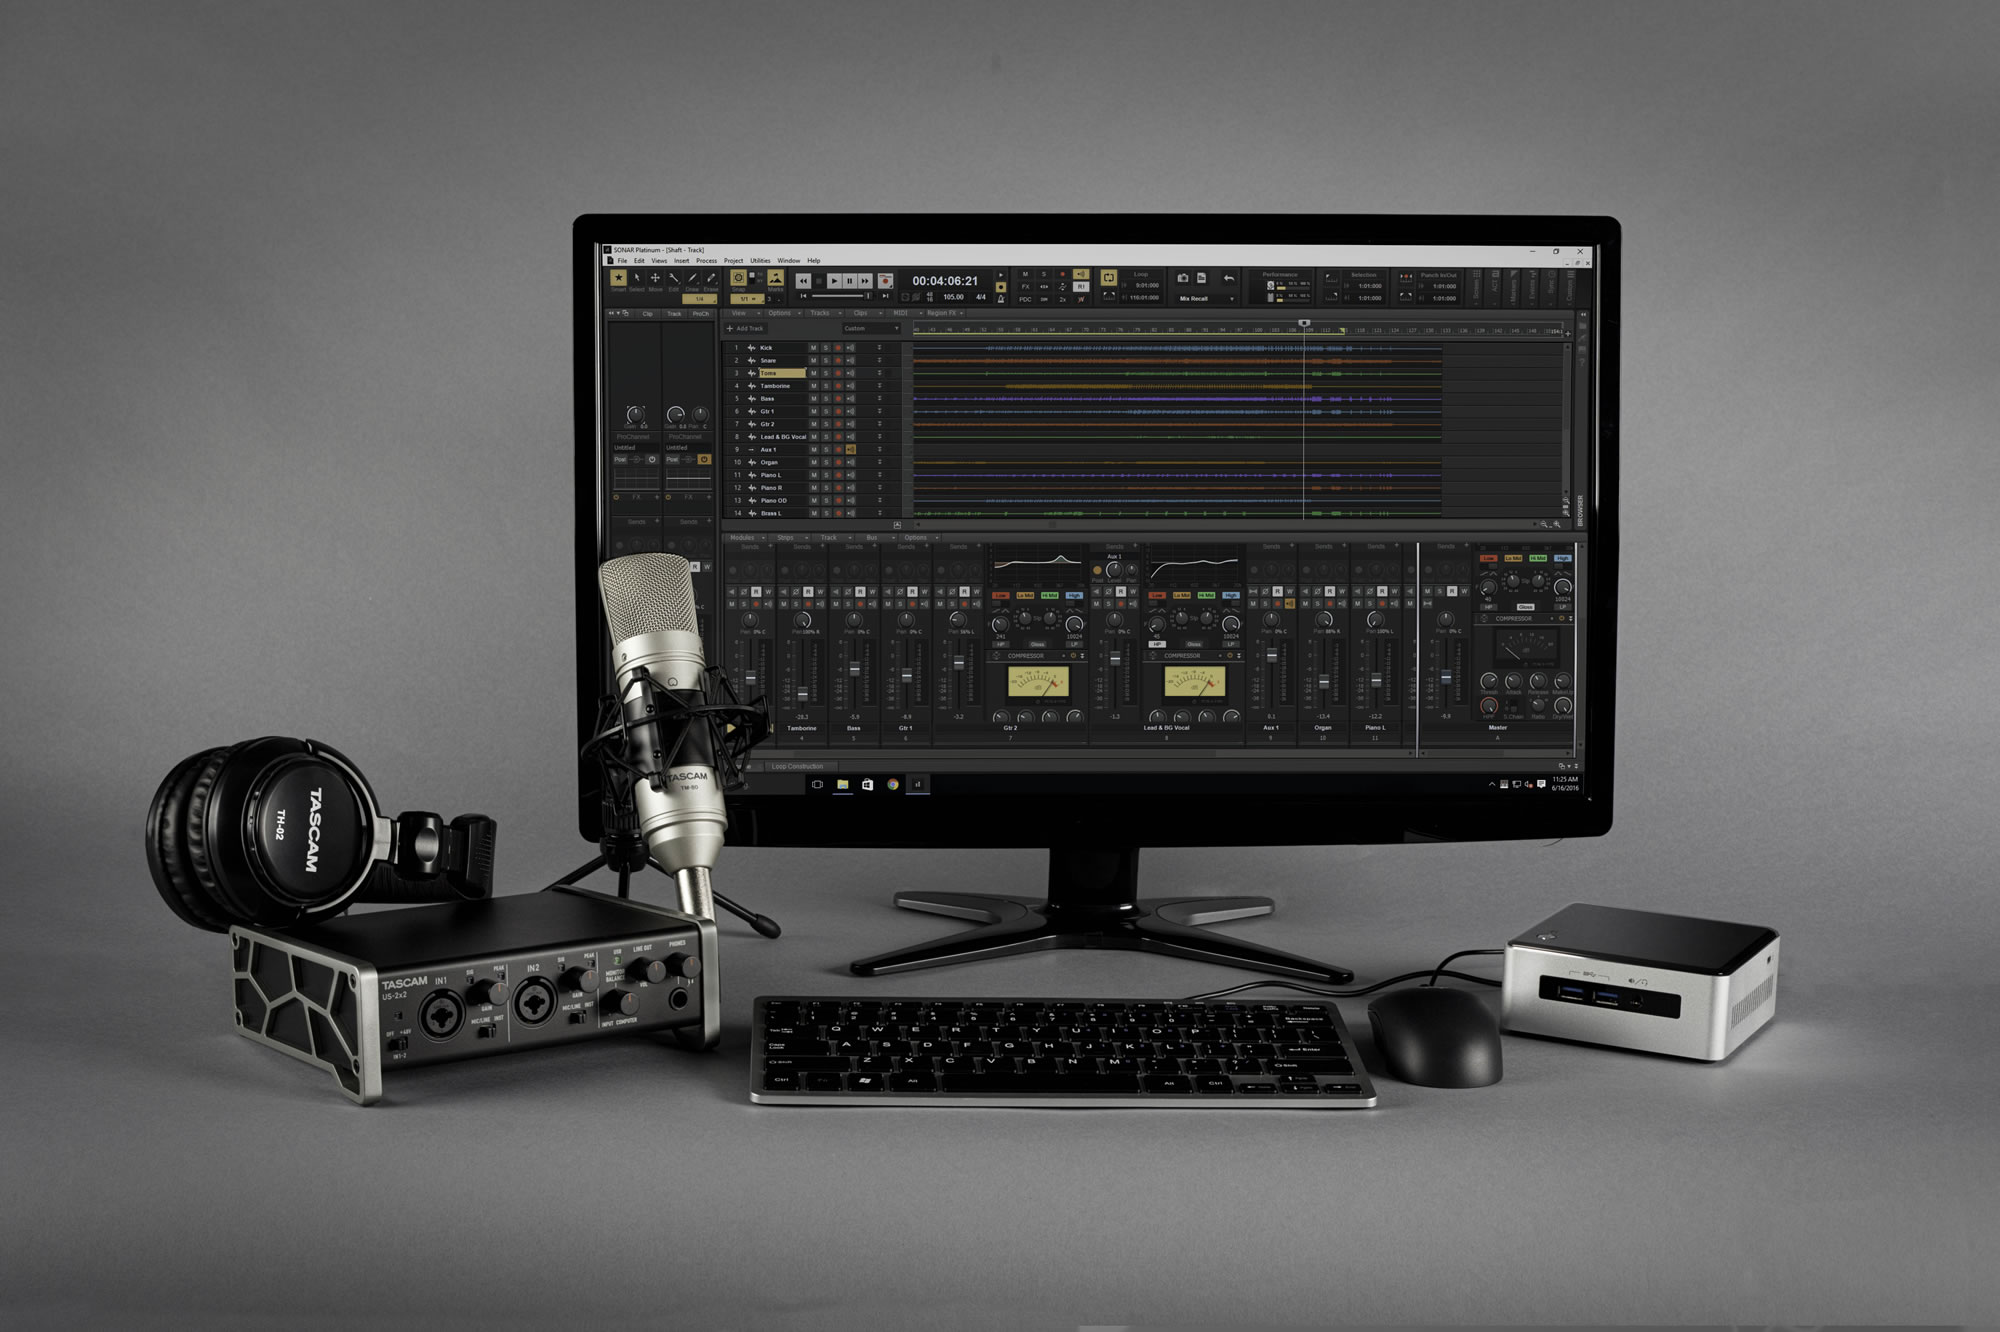 Tascam Announces Track Factory Audio Production System Intel Nuc Sonar Pro Us 2x2 Interface Mic Headphones